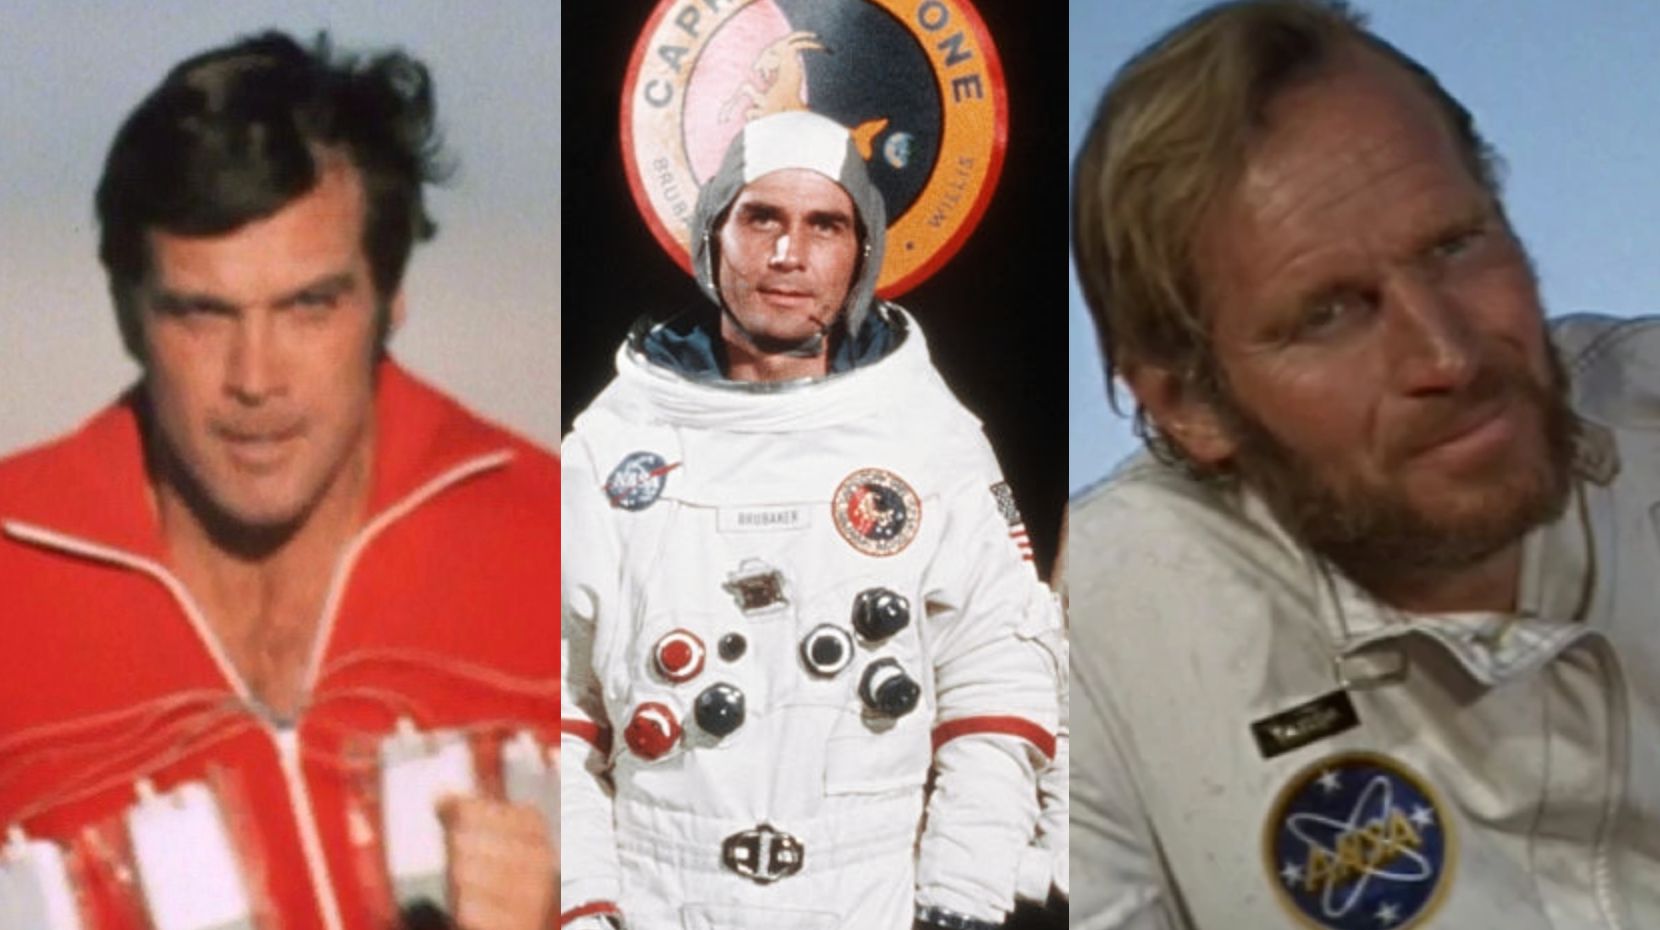 Fictional Astronauts Austin Brubaker and Taylor